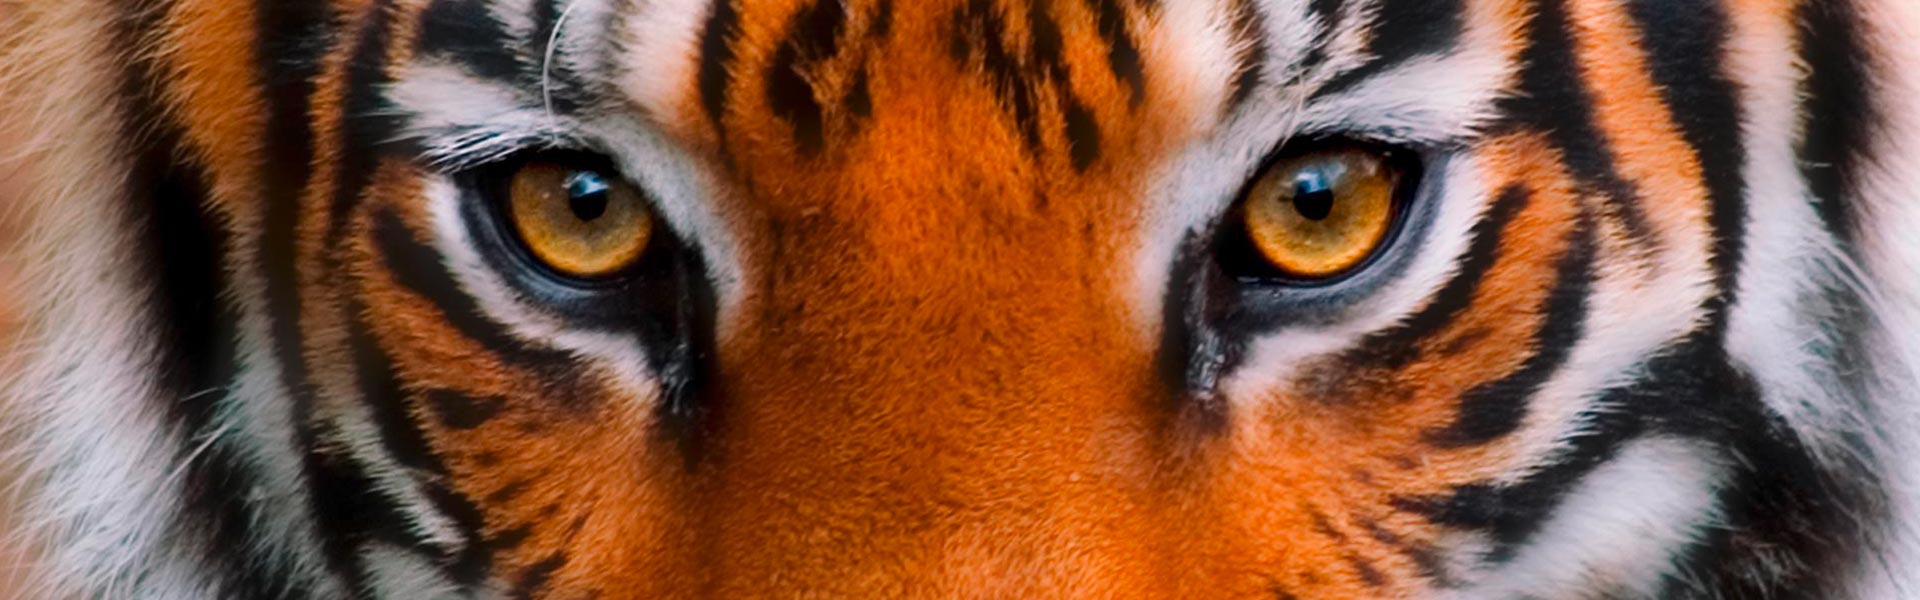 Zoo Barben - Tigre